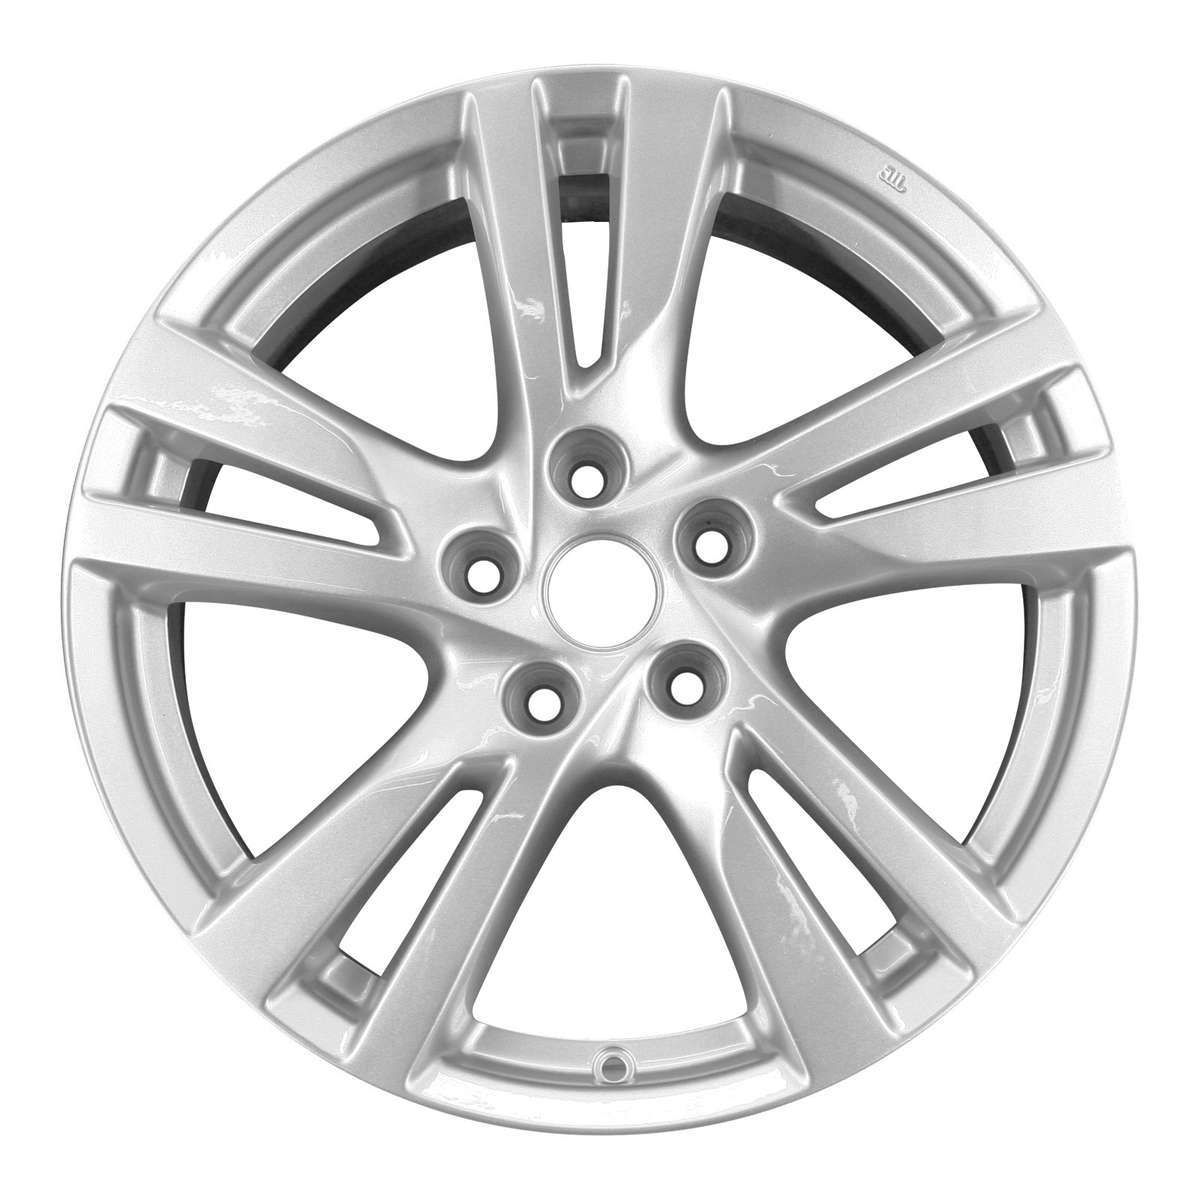 2015 Nissan Altima New 18" Replacement Wheel Rim RW62594S